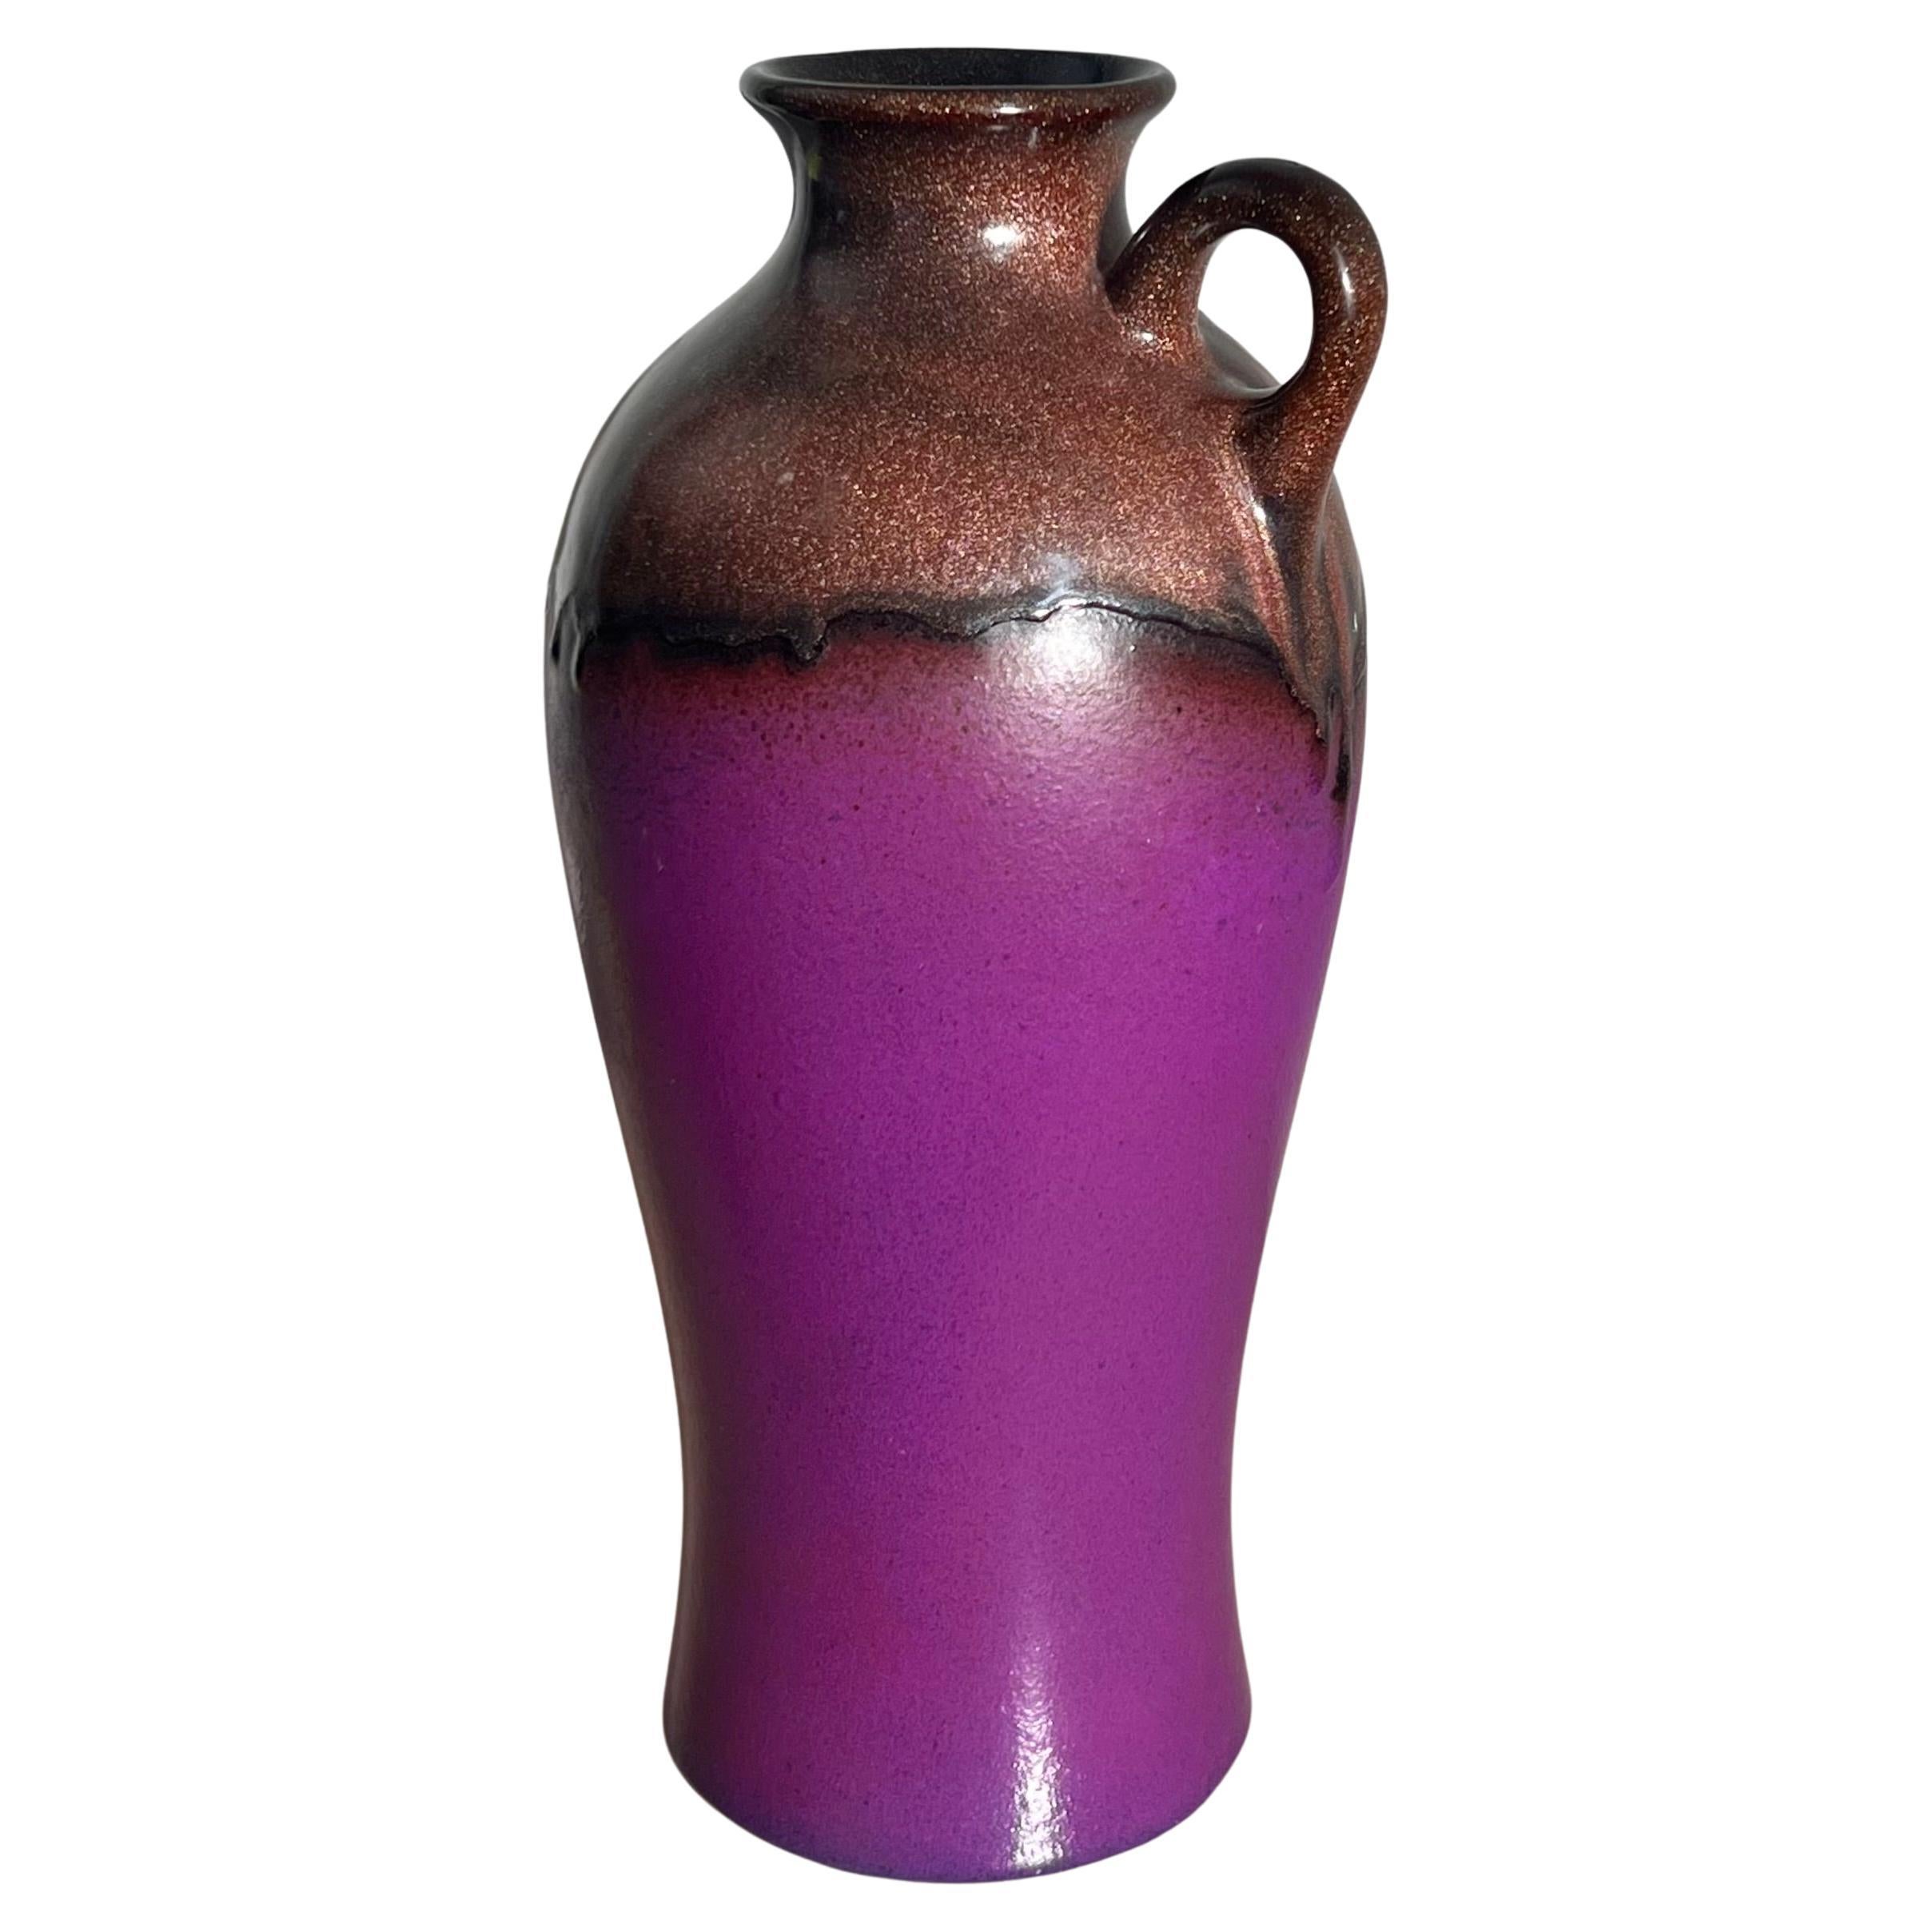 Mid century vessel by Fohr Keramik, in deep purple, mid 20th century